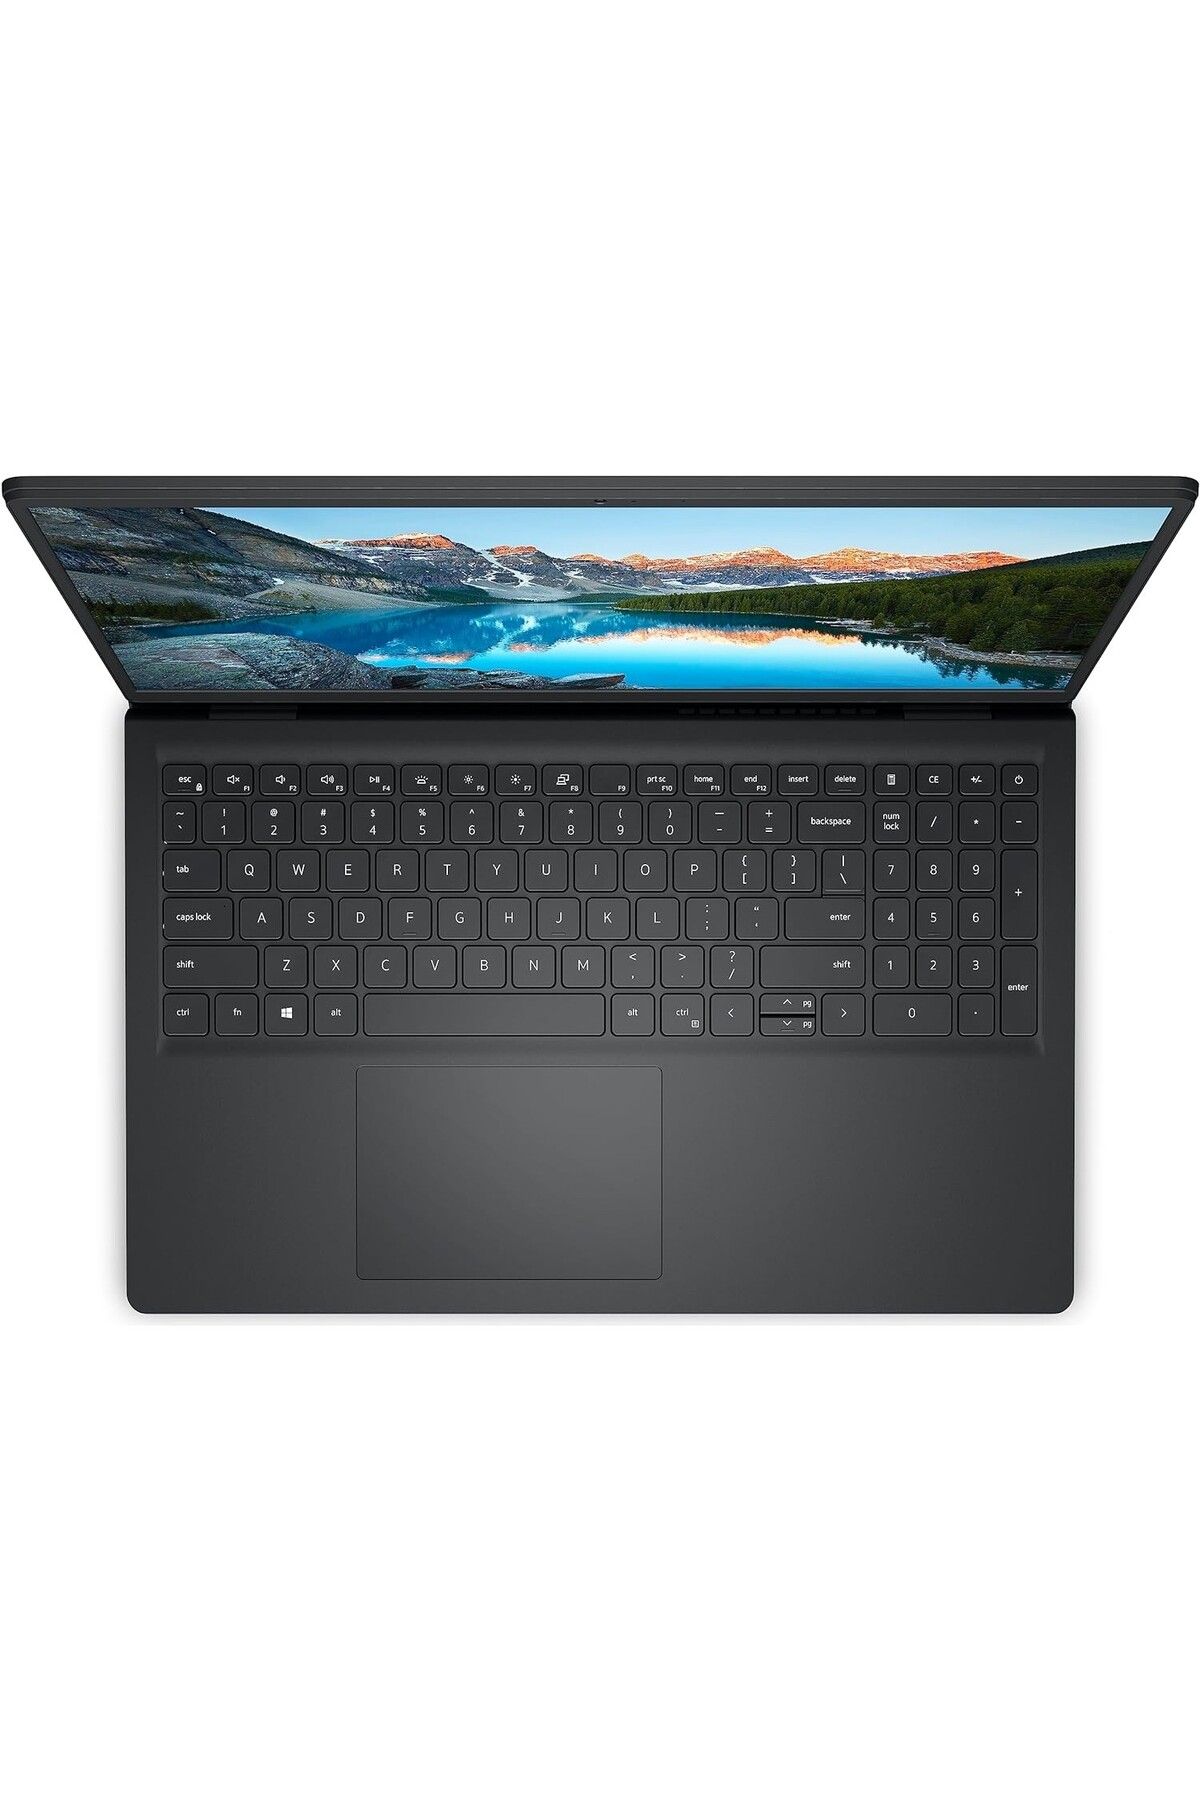 Dell Inspiron 15” Notebook 3520 CORE I3-1115G4 8GB 256GB Ssd 15.6" Fhd